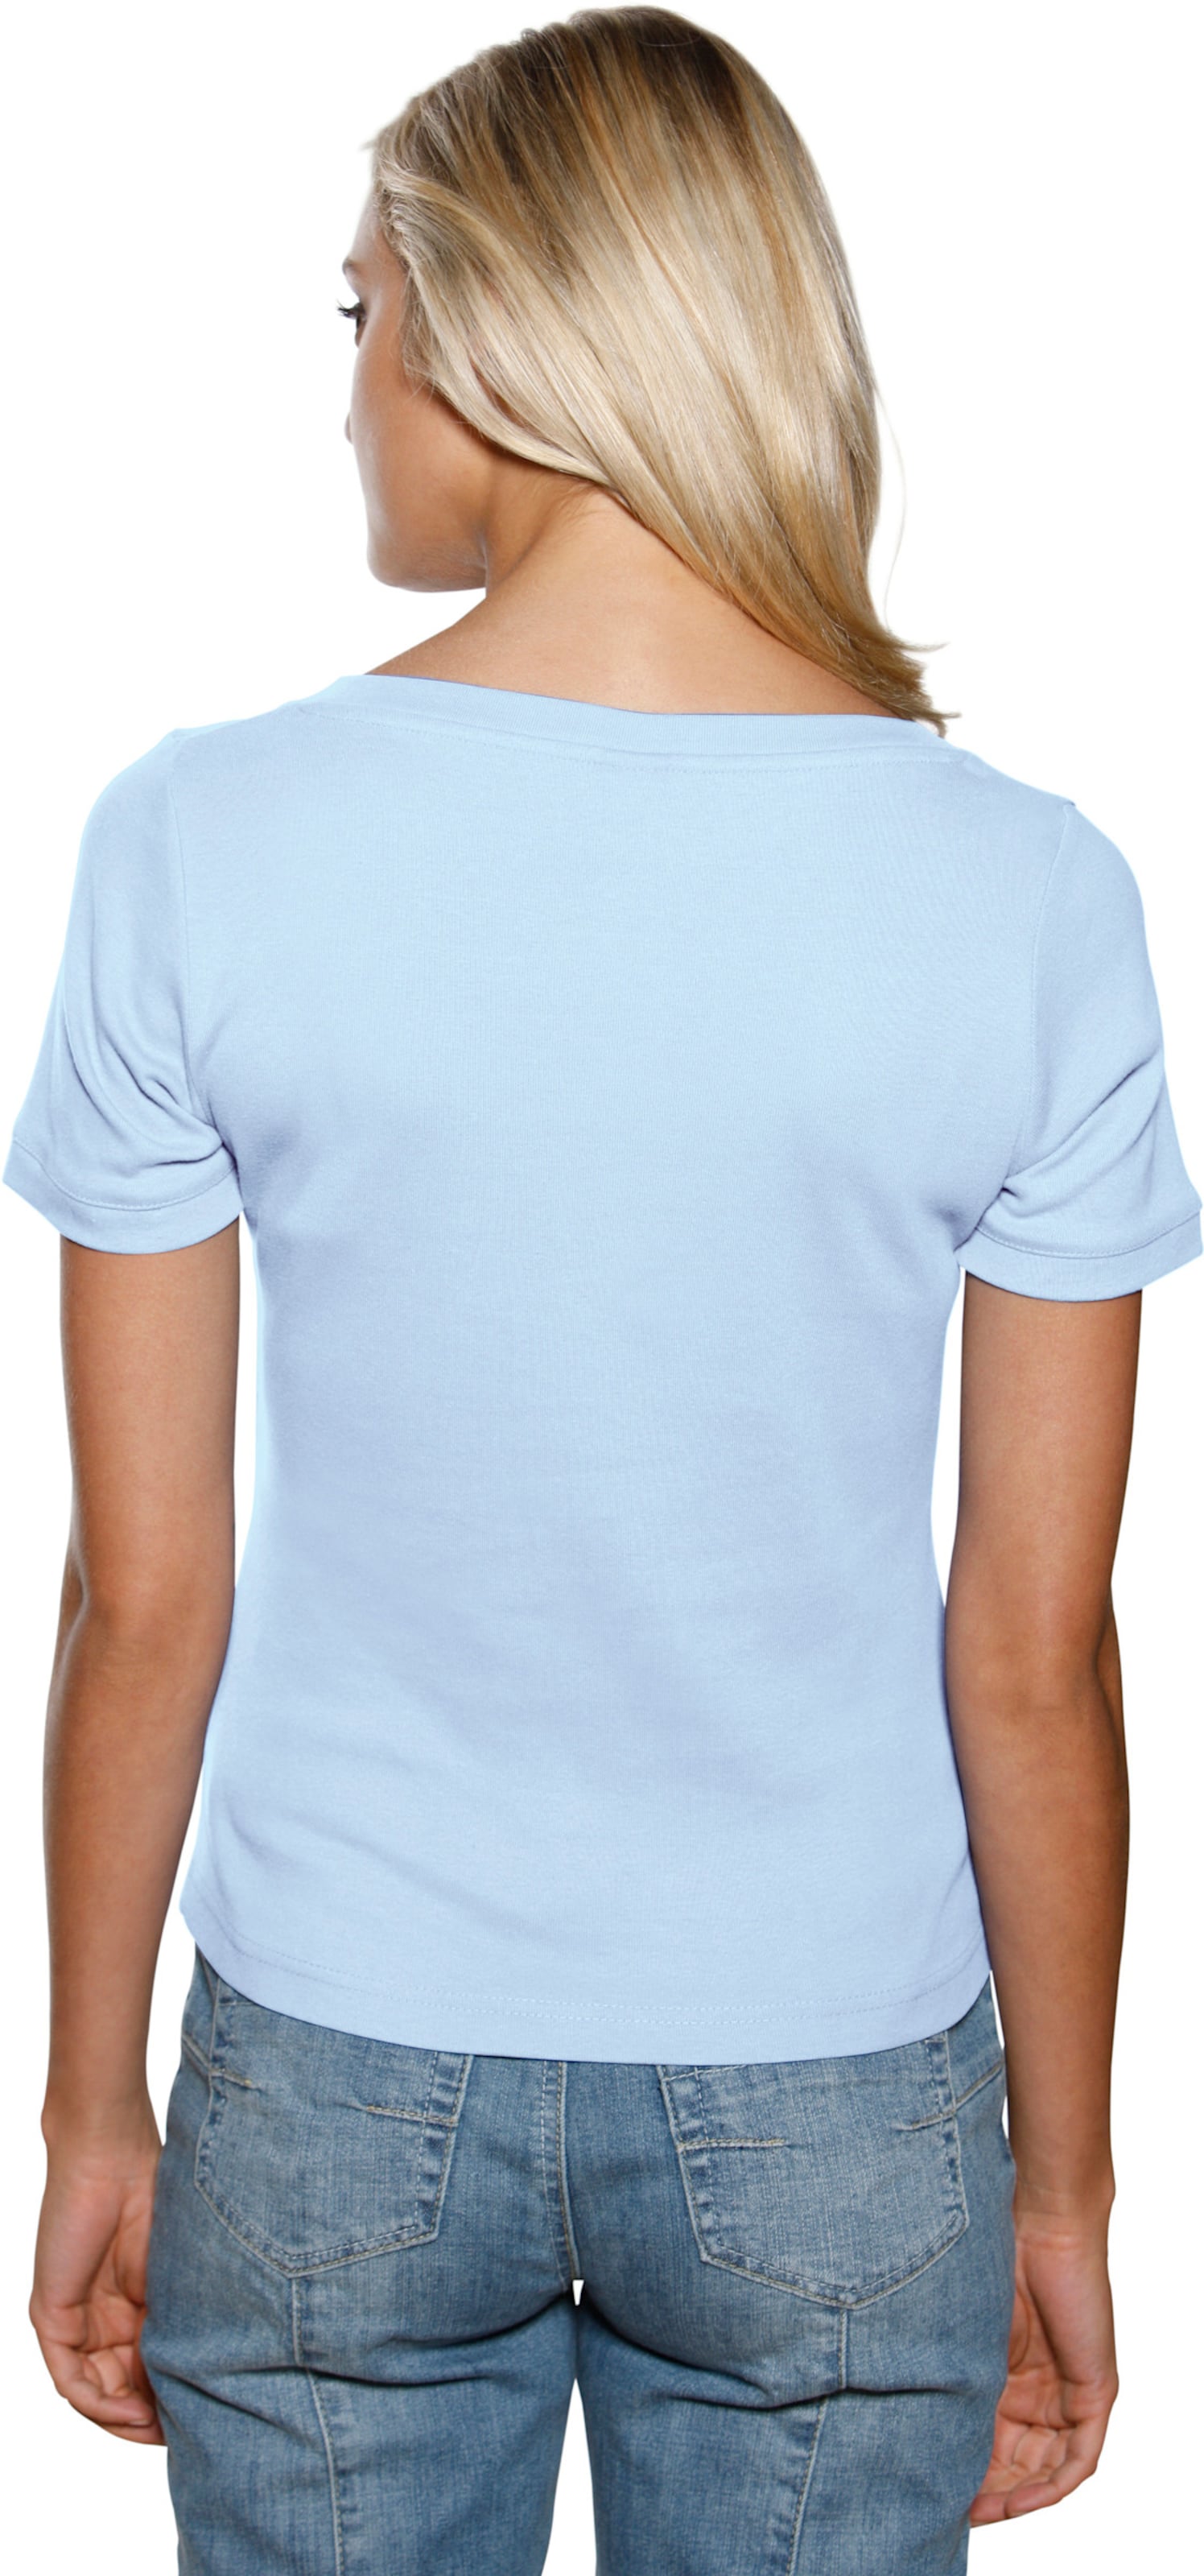 Feiner günstig Kaufen-Carré-Shirt in bleu von heine. Carré-Shirt in bleu von heine <![CDATA[Carré-Shirt Mit großzügigem Ausschnitt. Aus trageangenehmer, feiner Rippenware. Figurbetonte Form.]]>. 